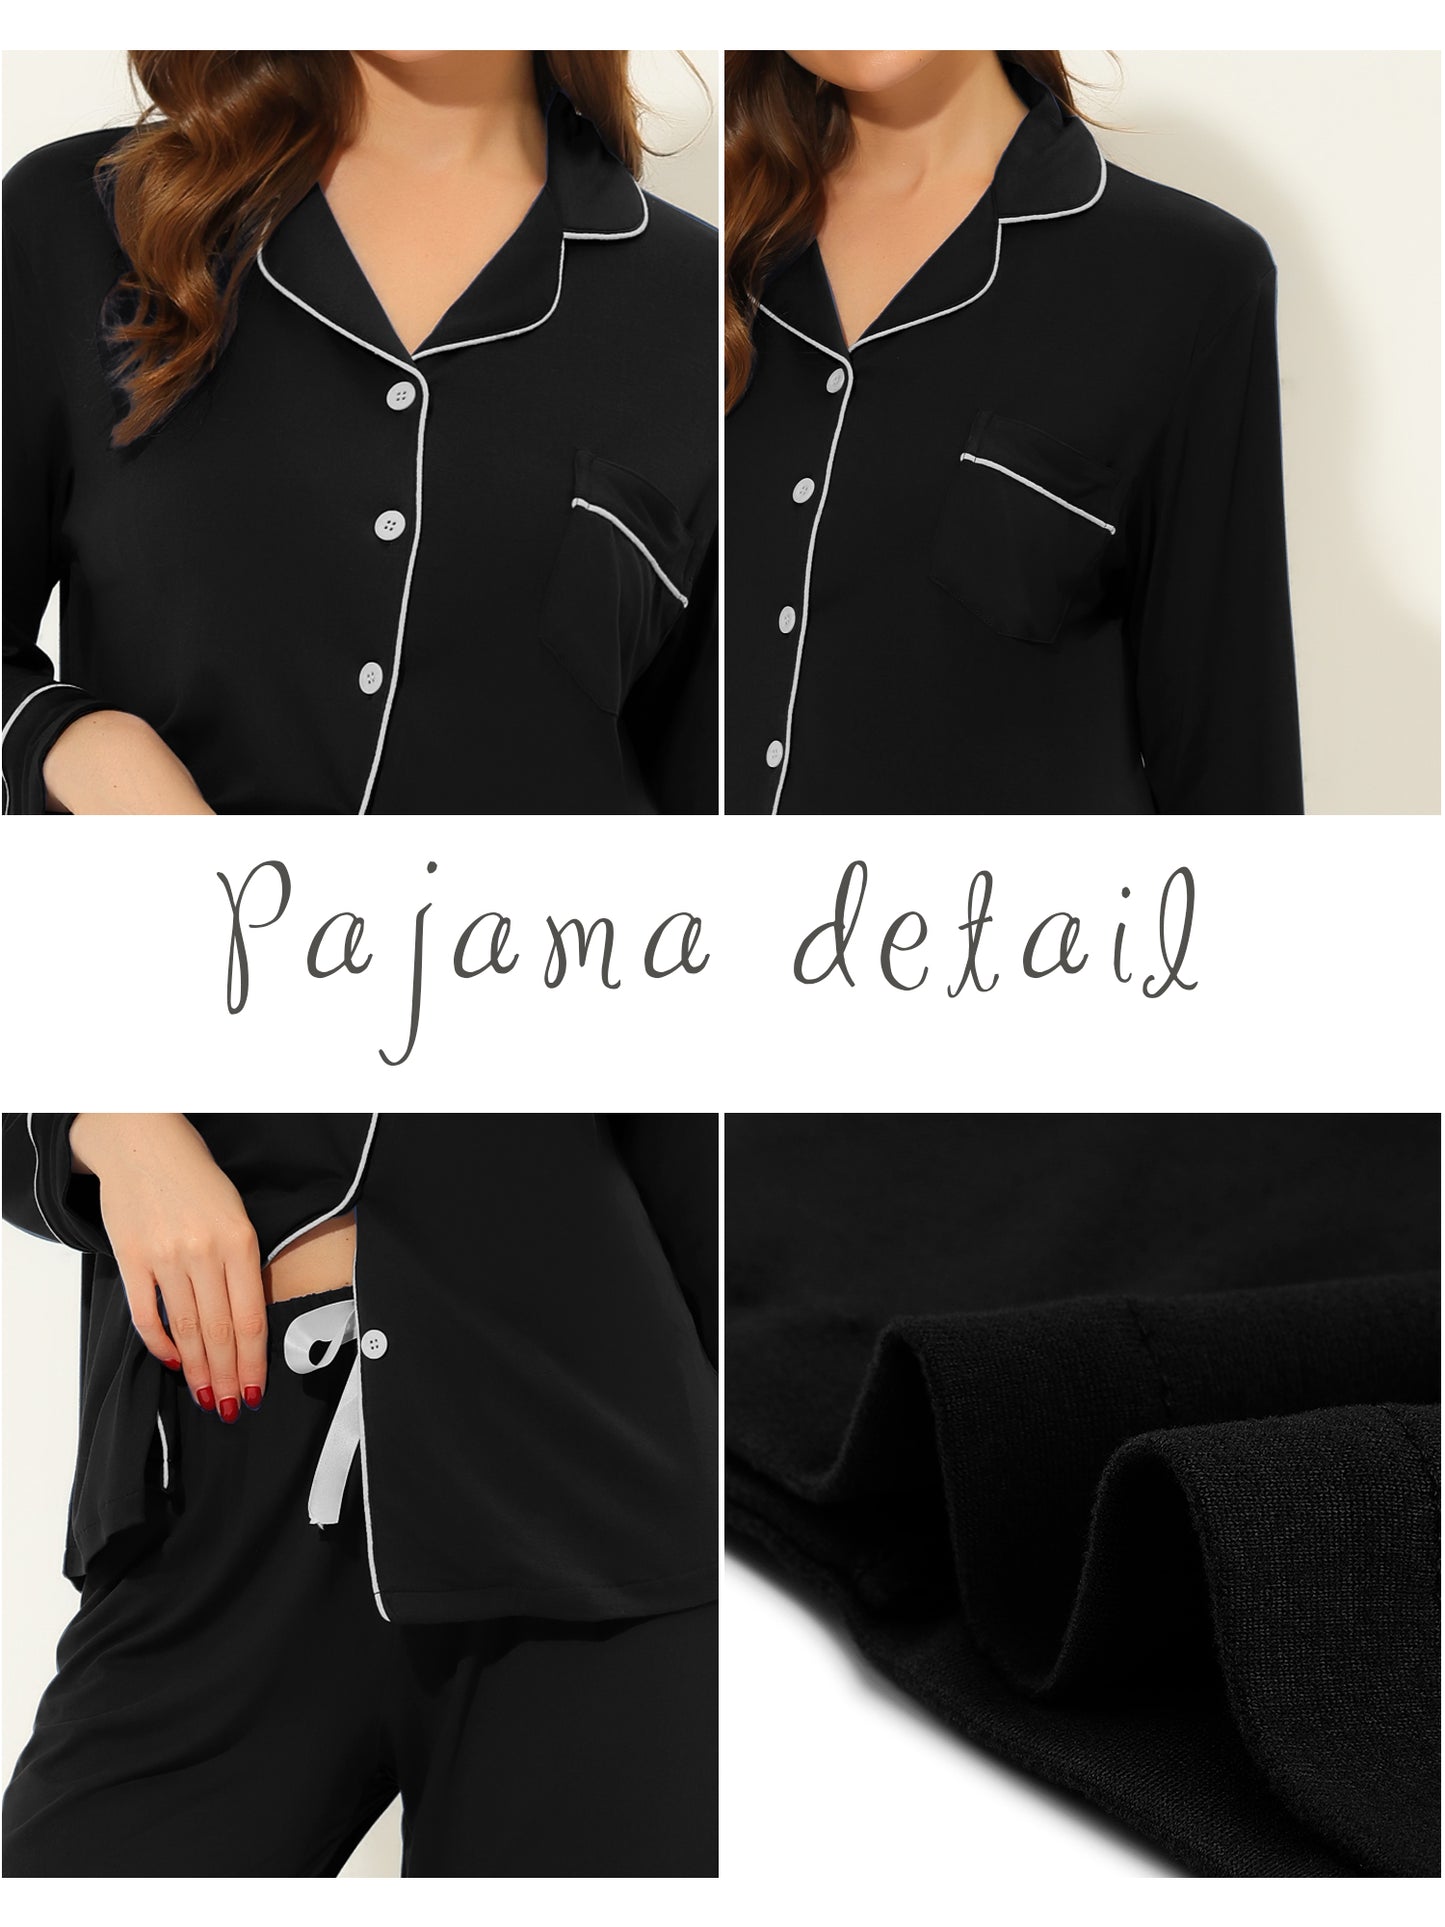 cheibear Pajama Sleep Shirt Nightwear Sleepwear Lounge Modal Pj Sets Black